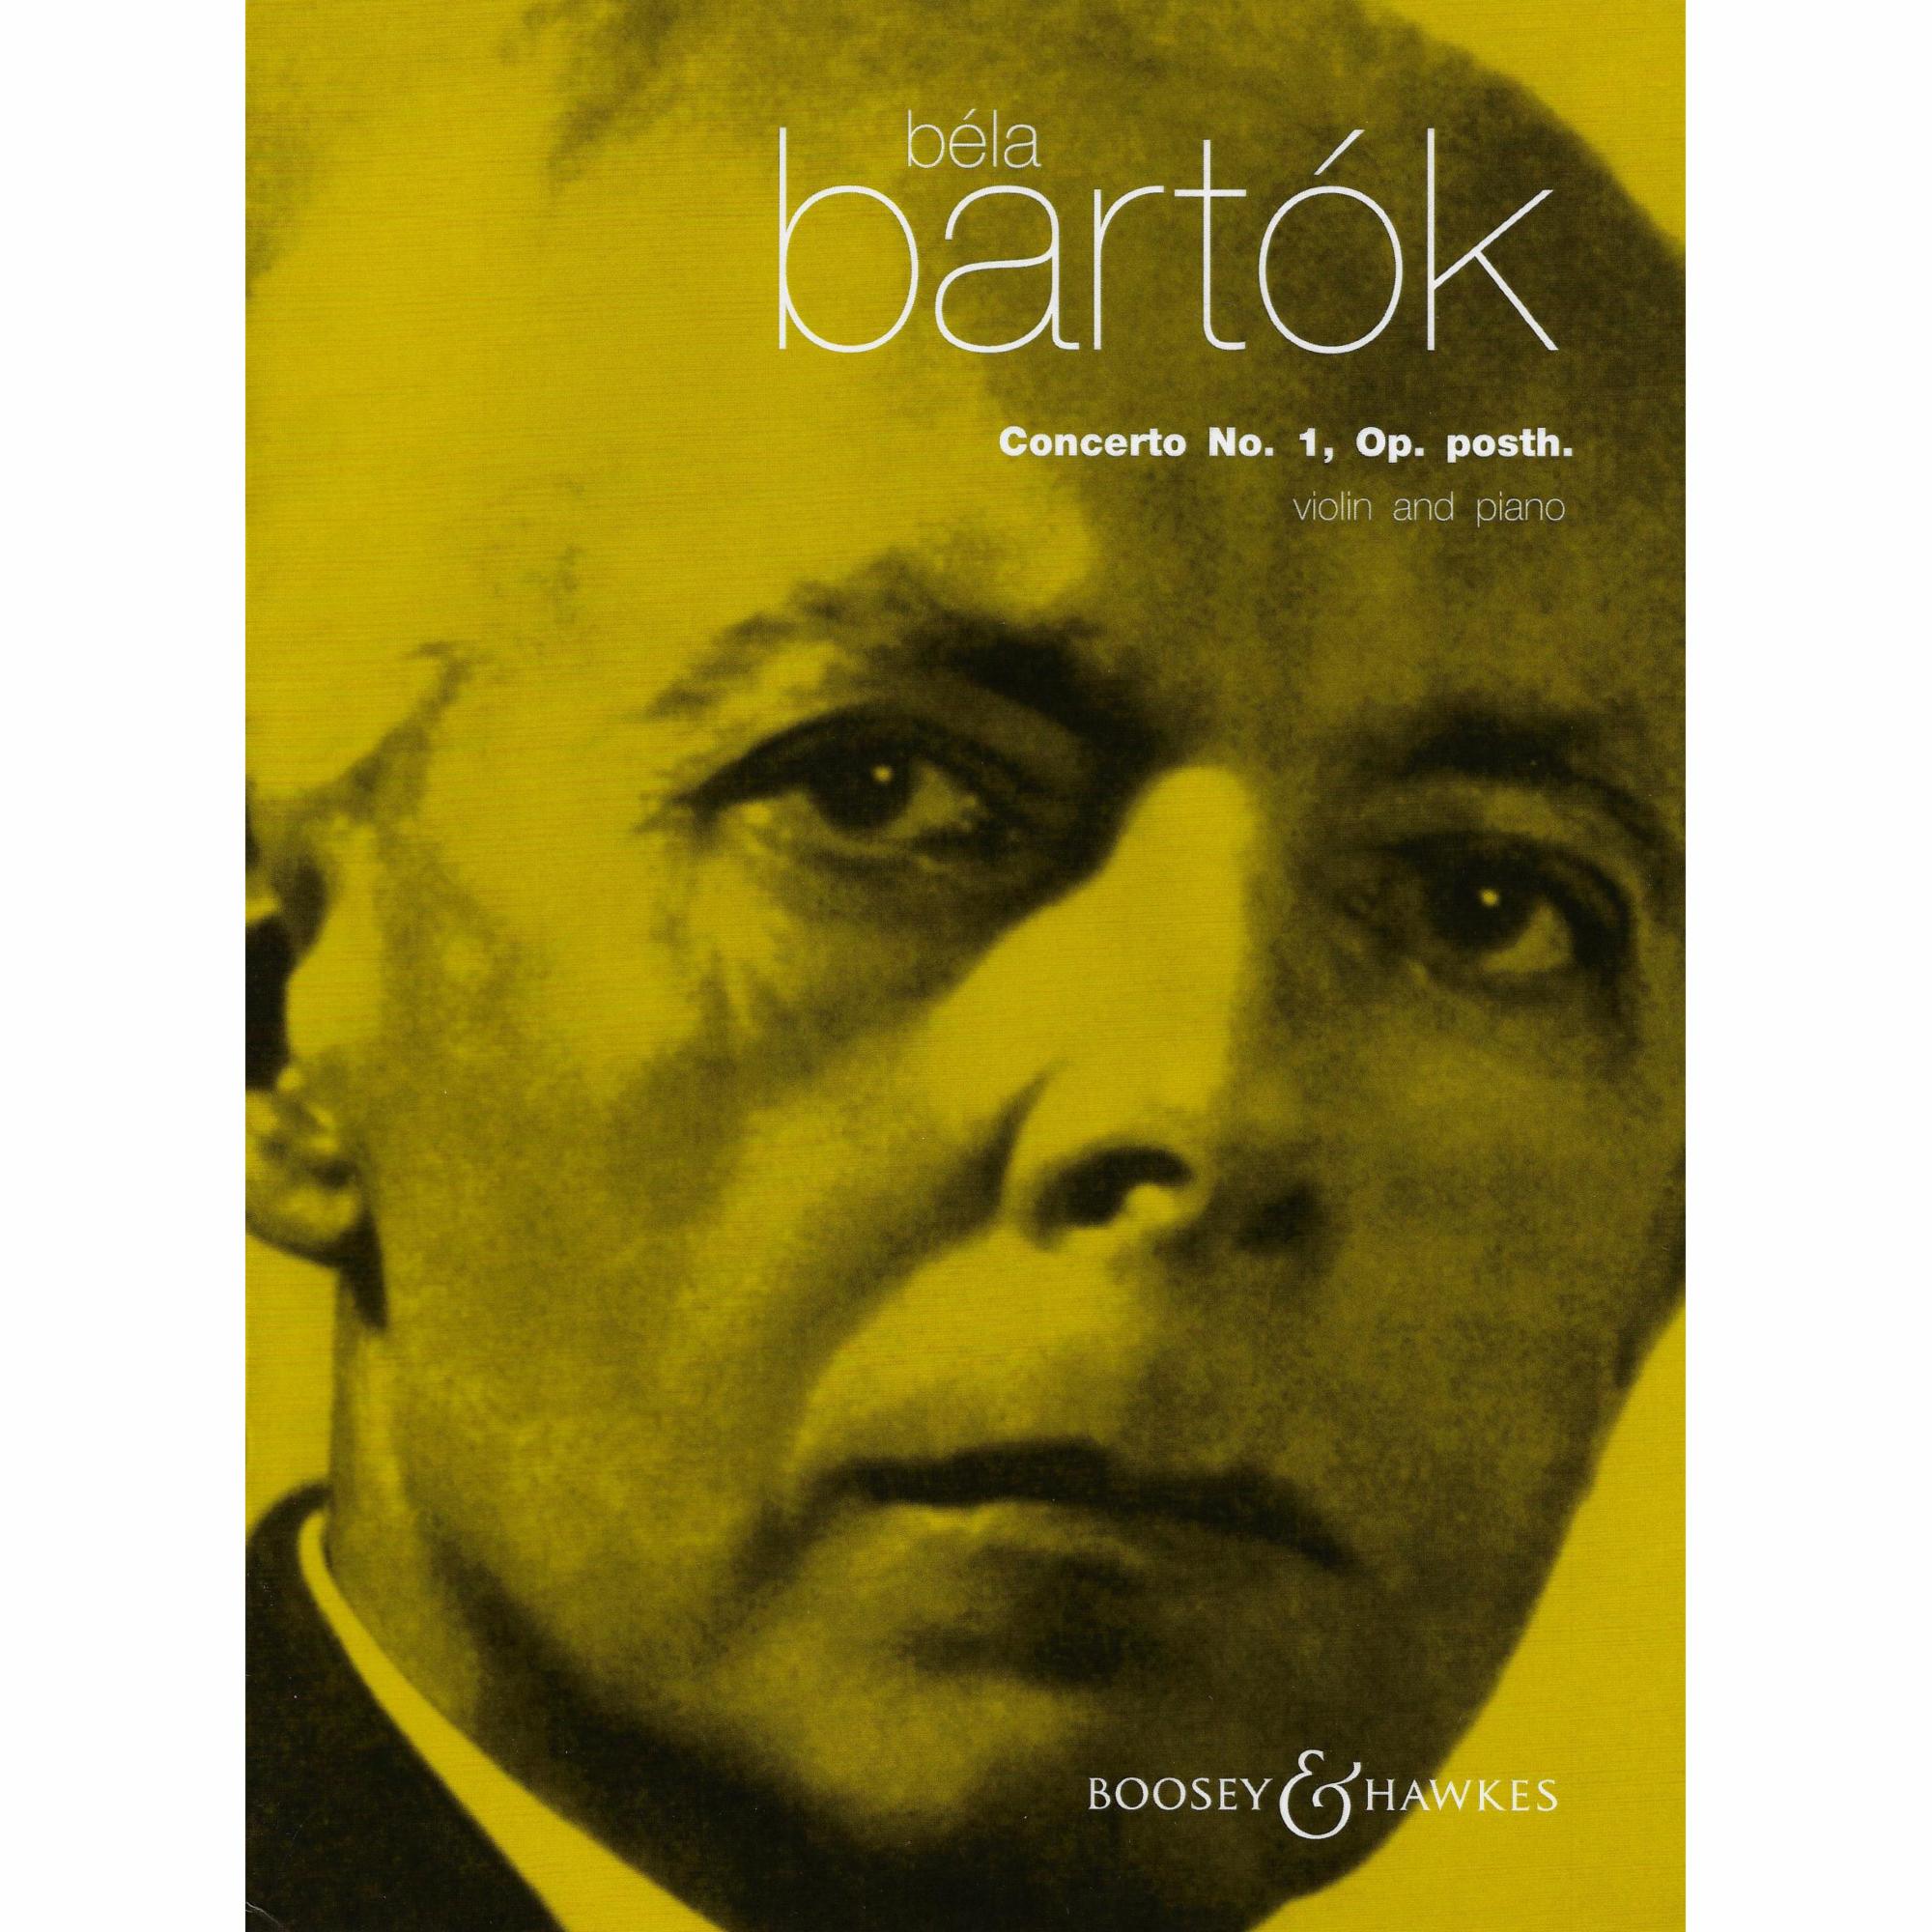 Bartok -- Concerto No. 1, Op. posth. for Violin and Piano